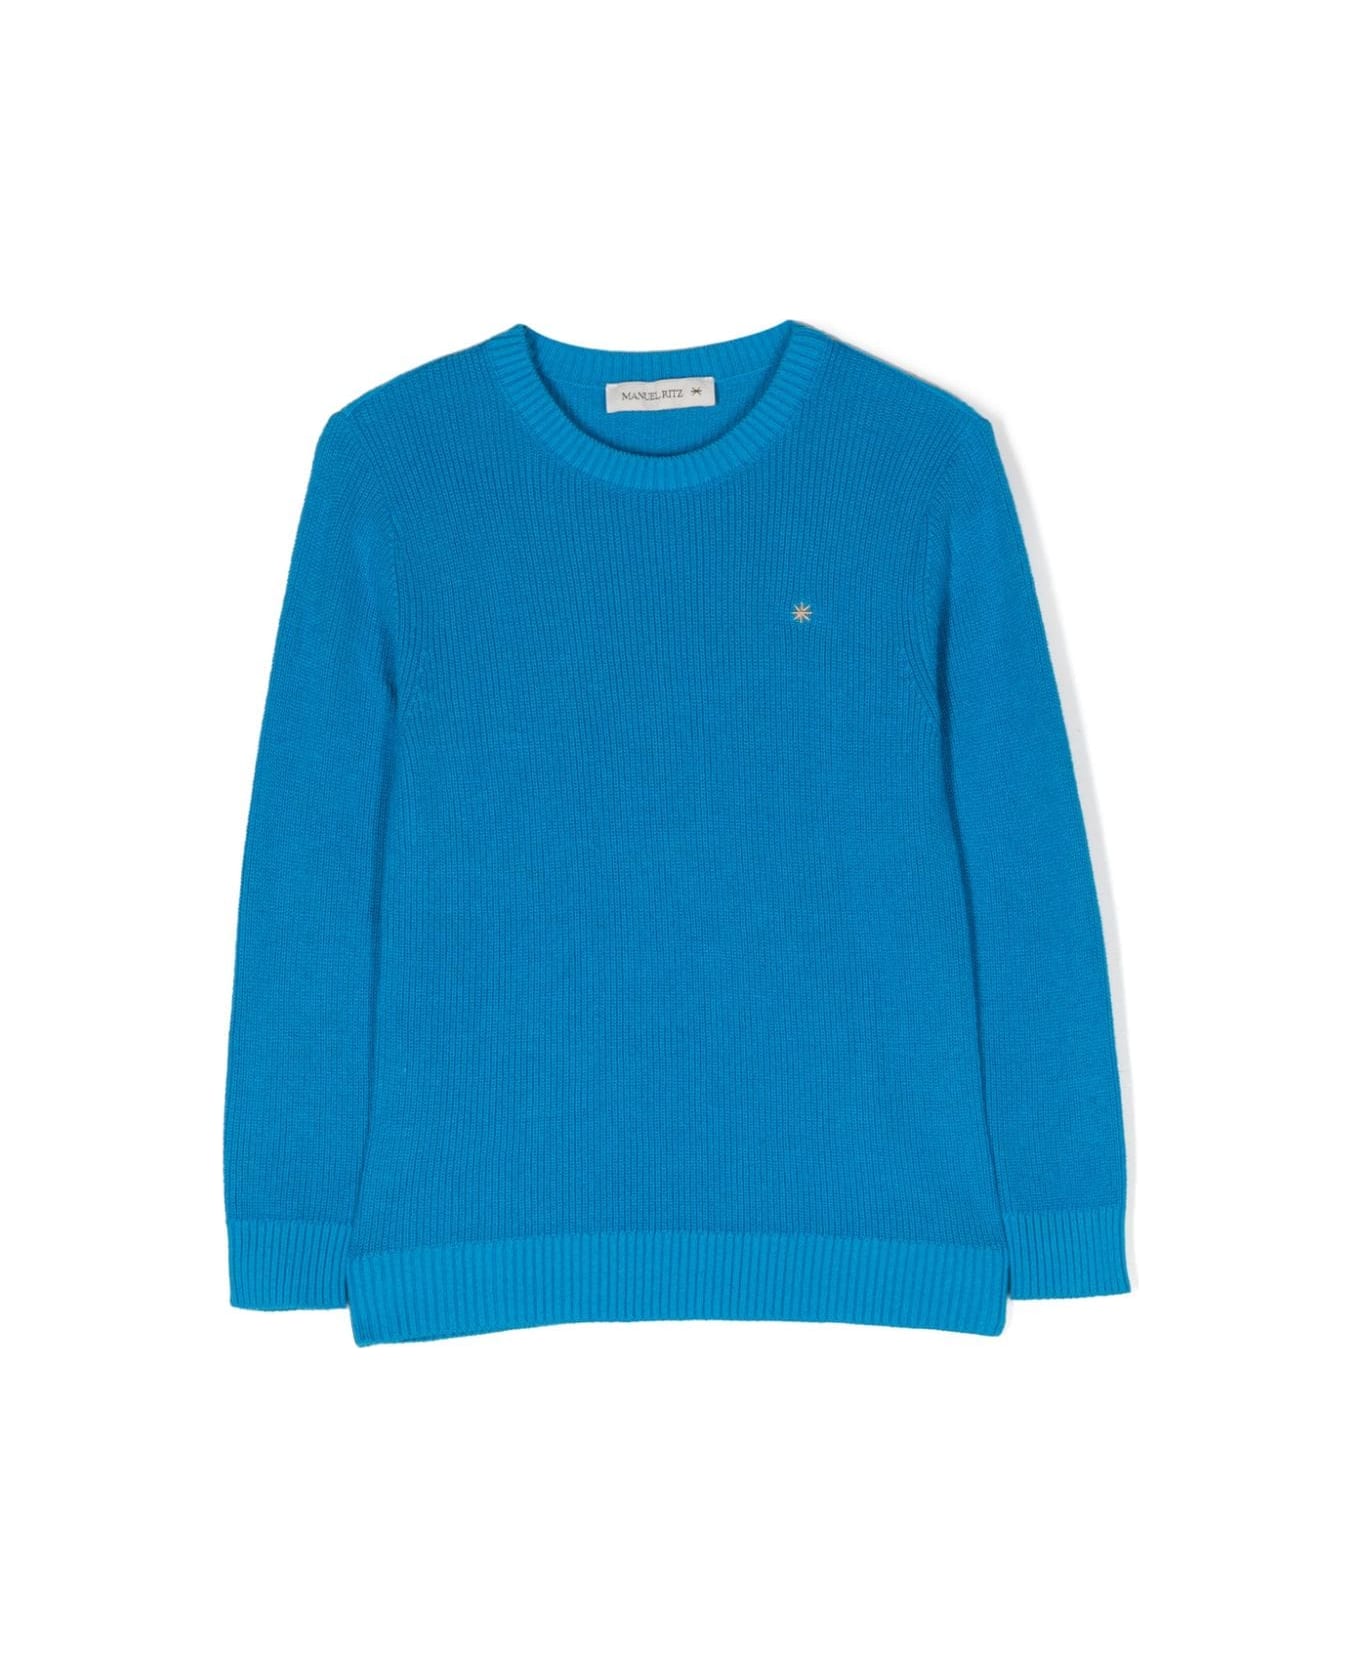 Manuel Ritz Light Blue Chill Neck Sweater - Light blue